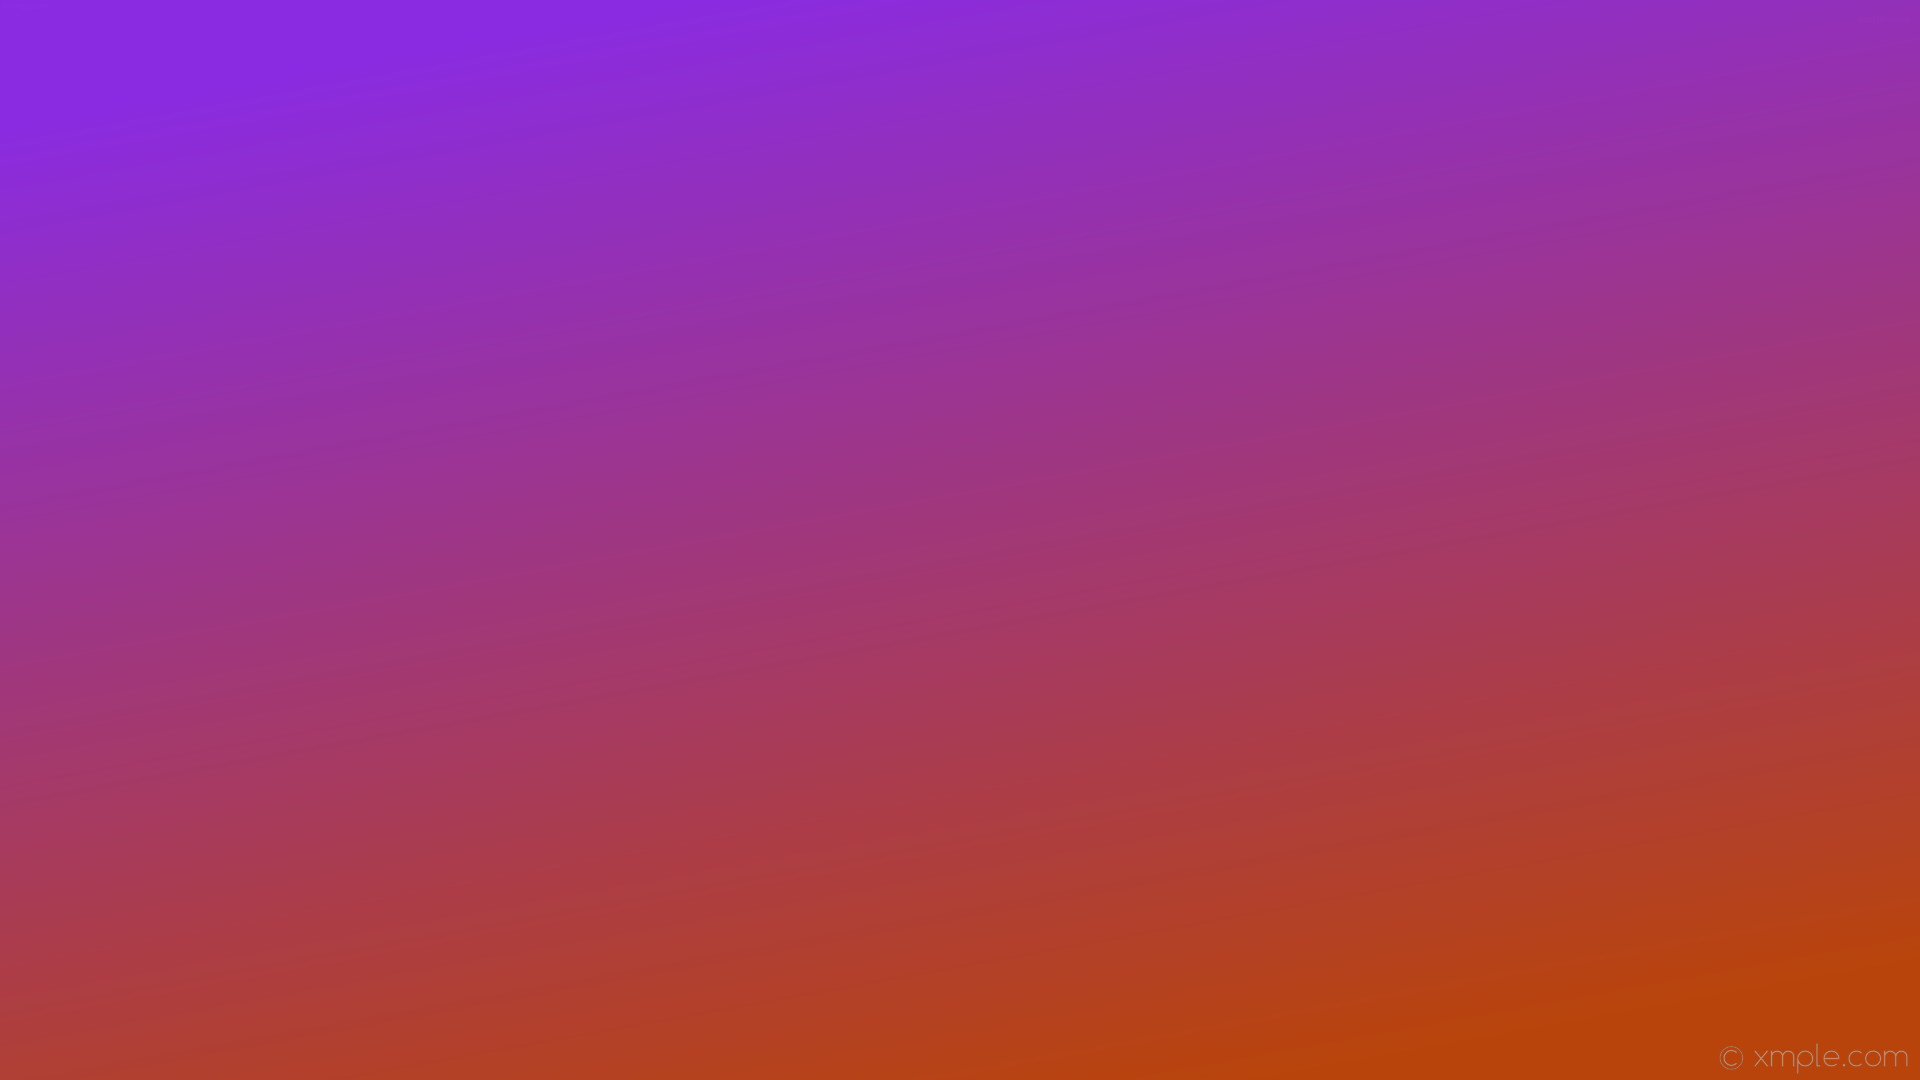 1920x1080 wallpaper gradient orange linear purple blue violet #8a2be2 #b9440b 120Â°